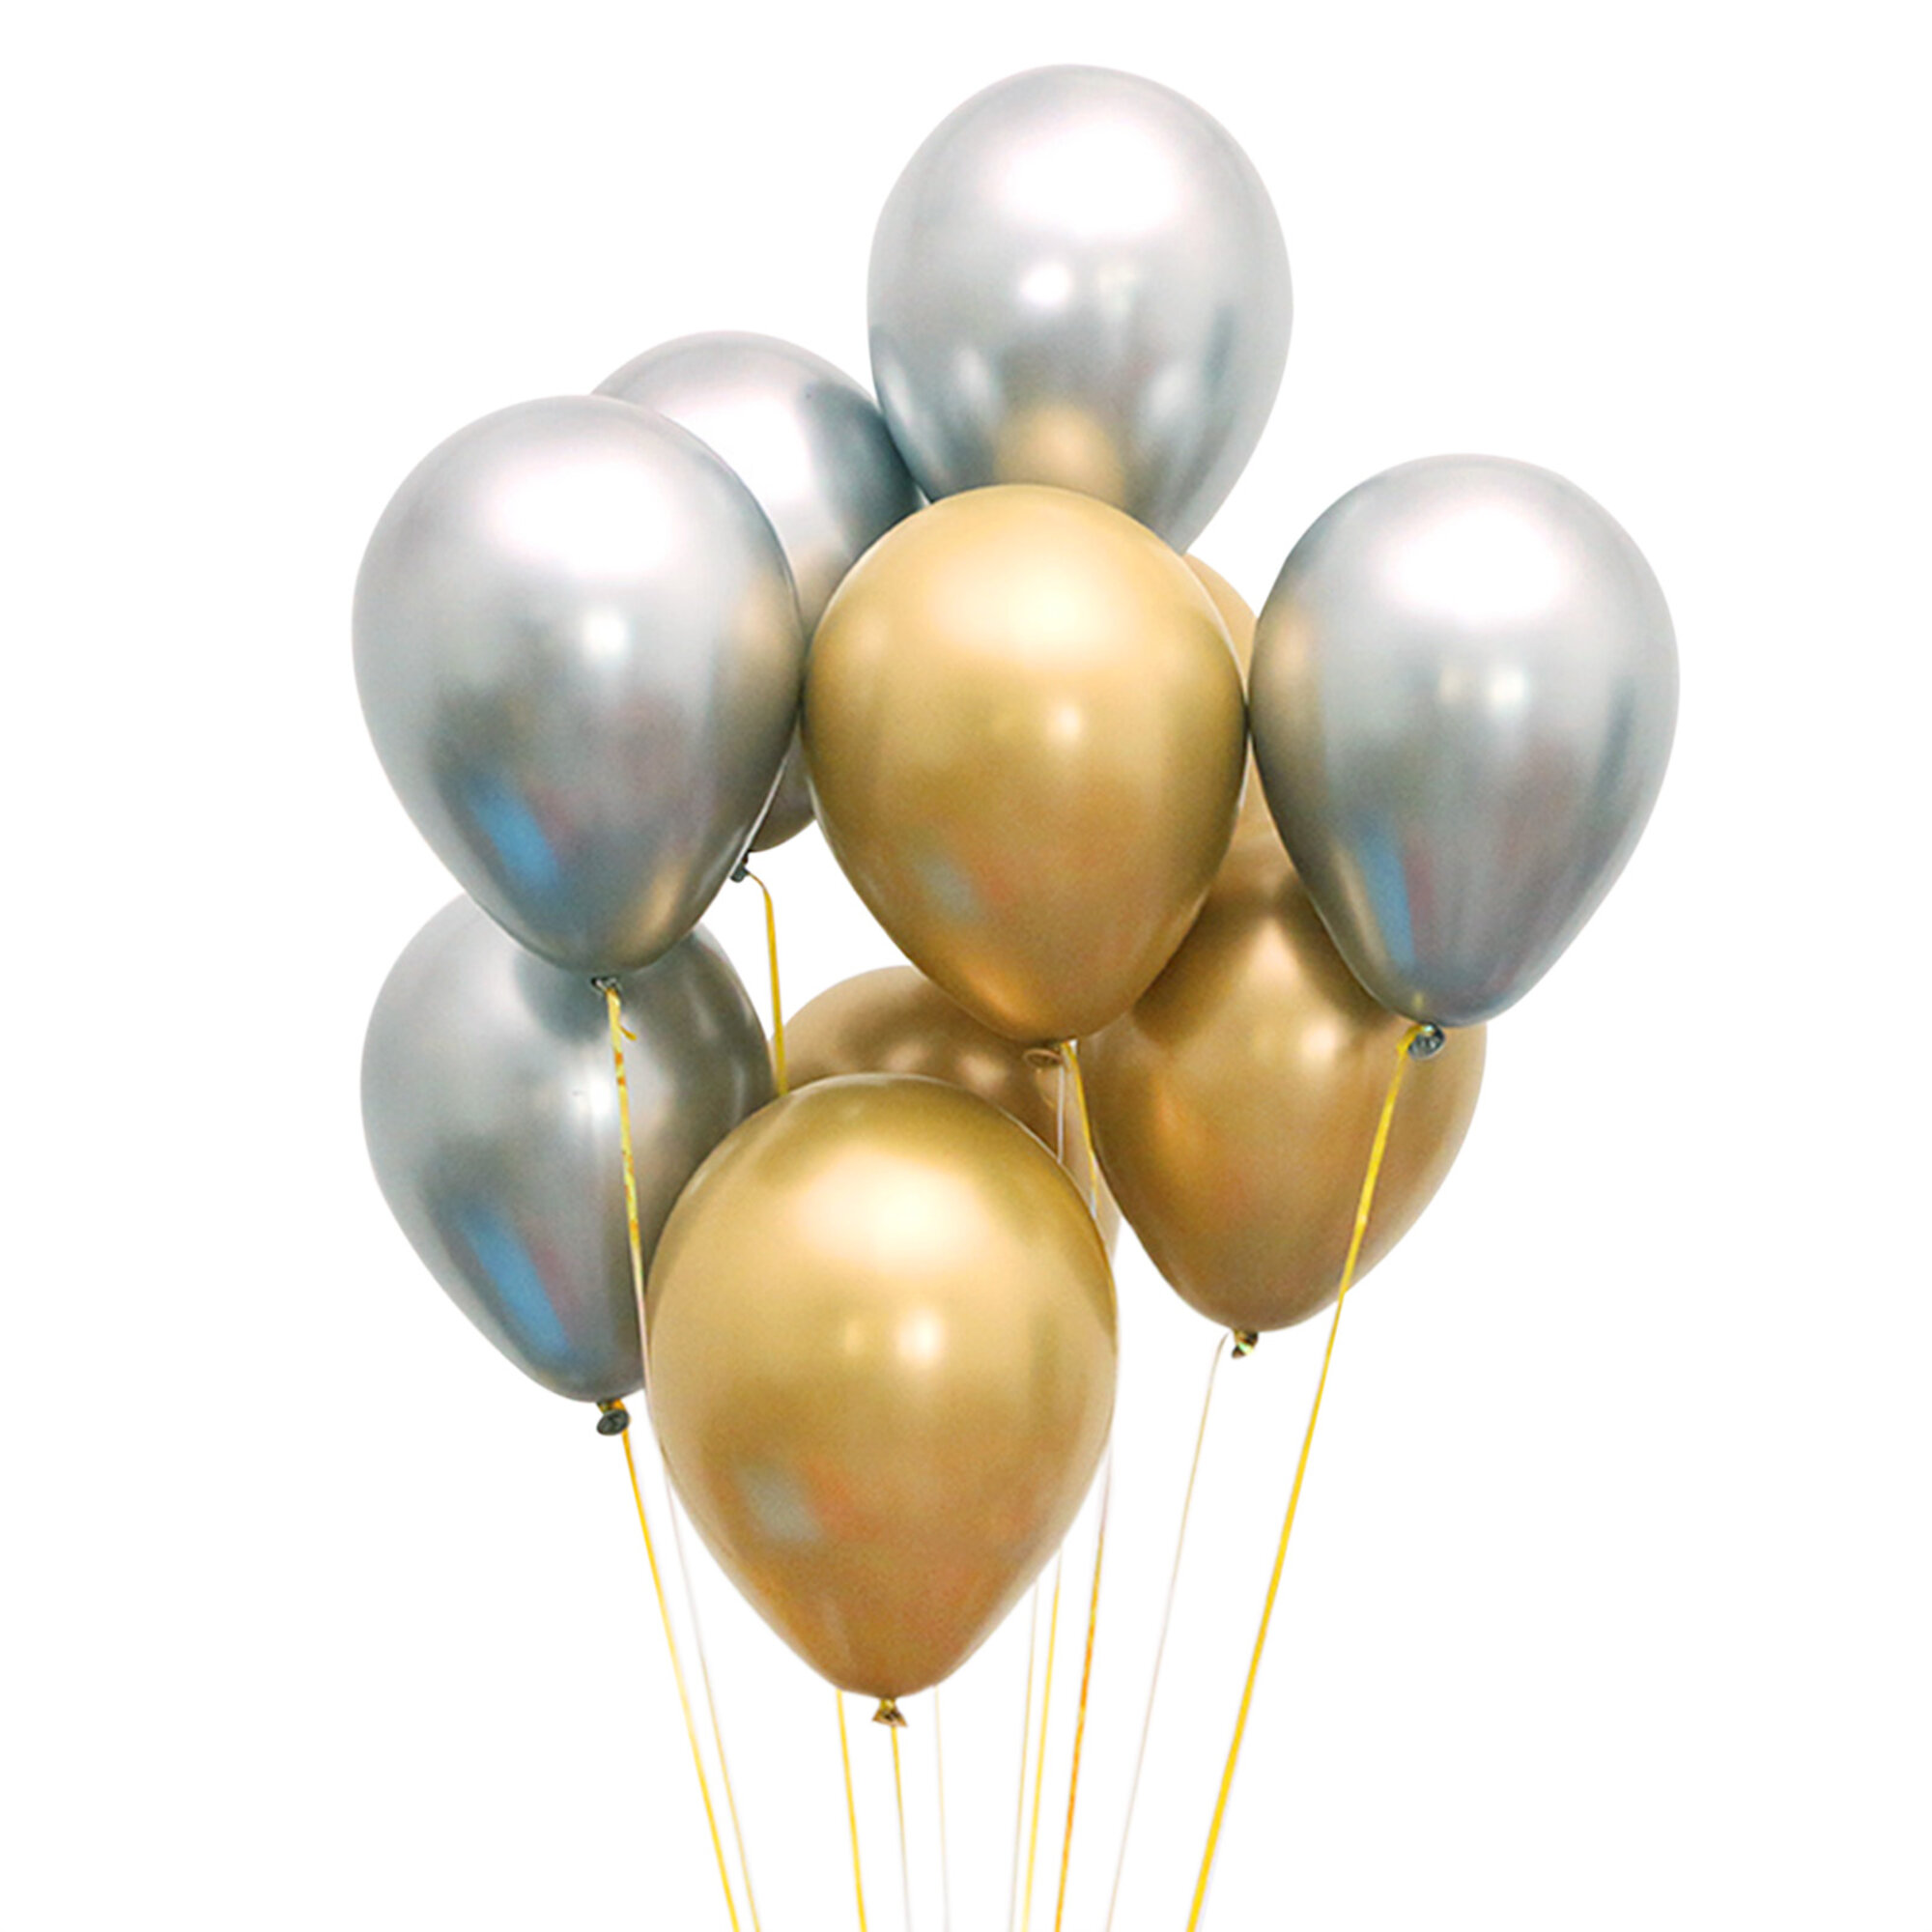 Balloons - Gold & Silver Chrome